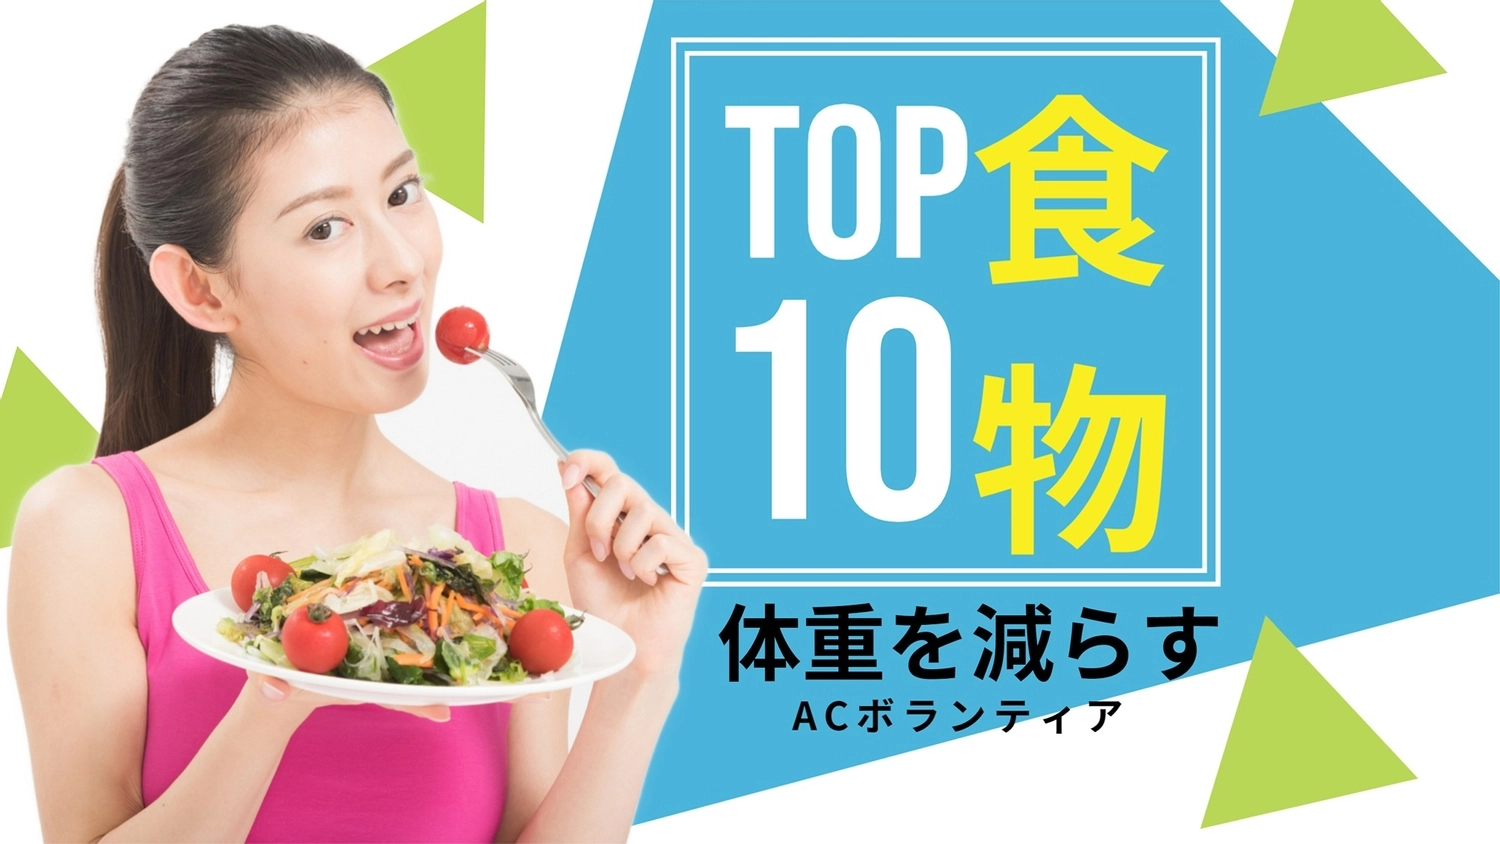 サラダを食べる女性写真のサムネイル, người đàn bà, nhân vật, tiếng Nhật, Youtube Thumbnail mẫu